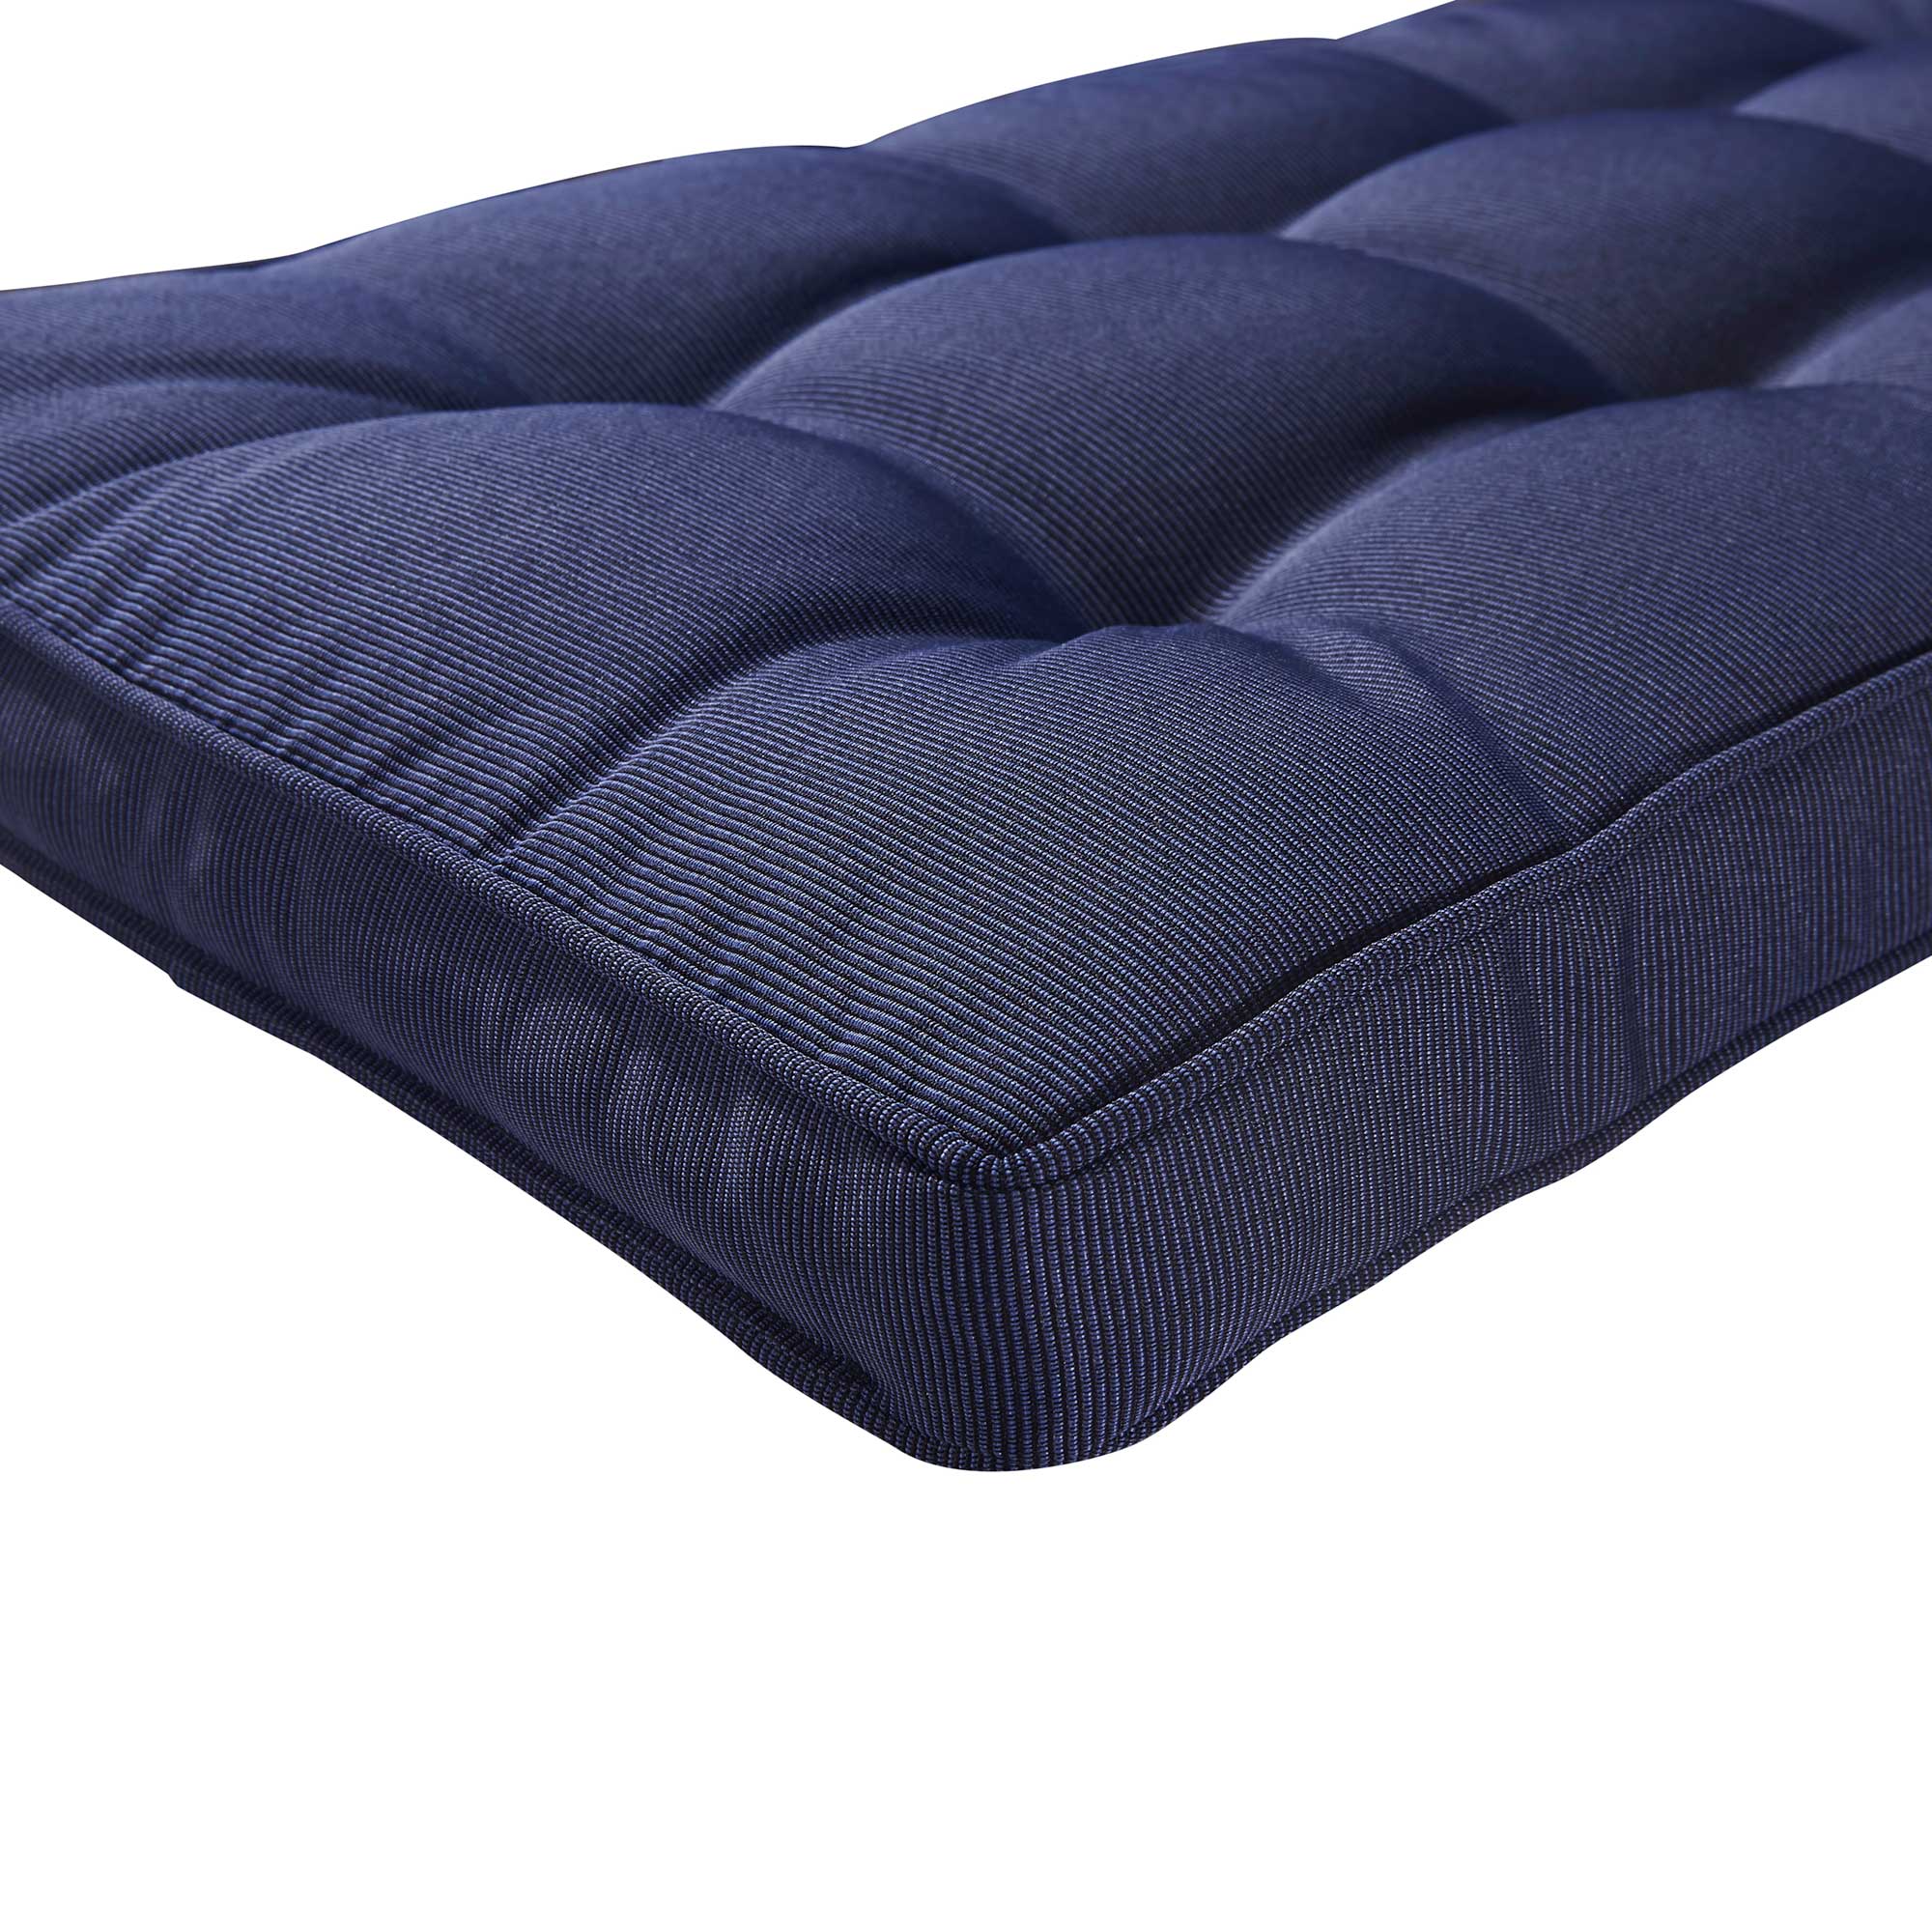 navy blue bench cushion